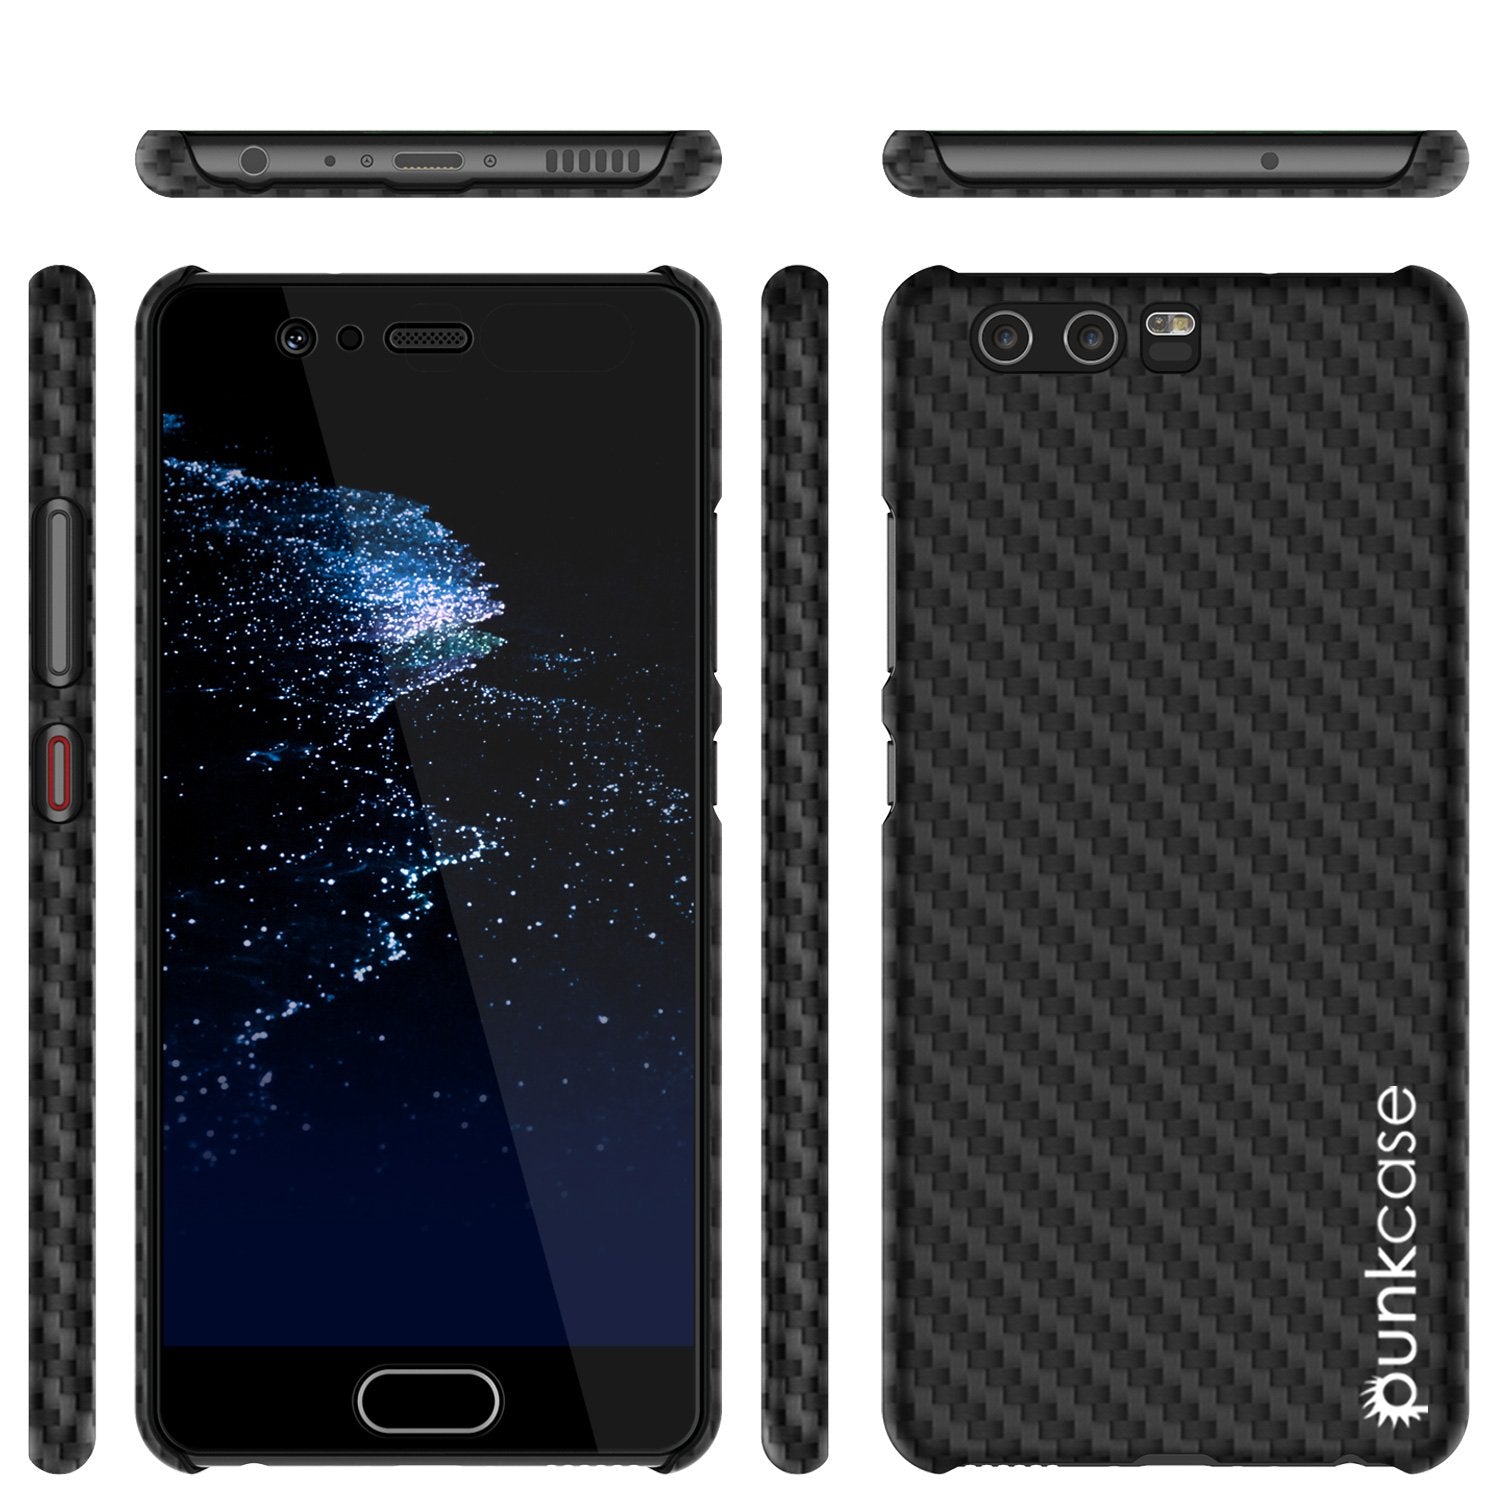 Huawei P10 Case, Punkcase CarbonShield, Heavy Duty [Jet Black] Cover